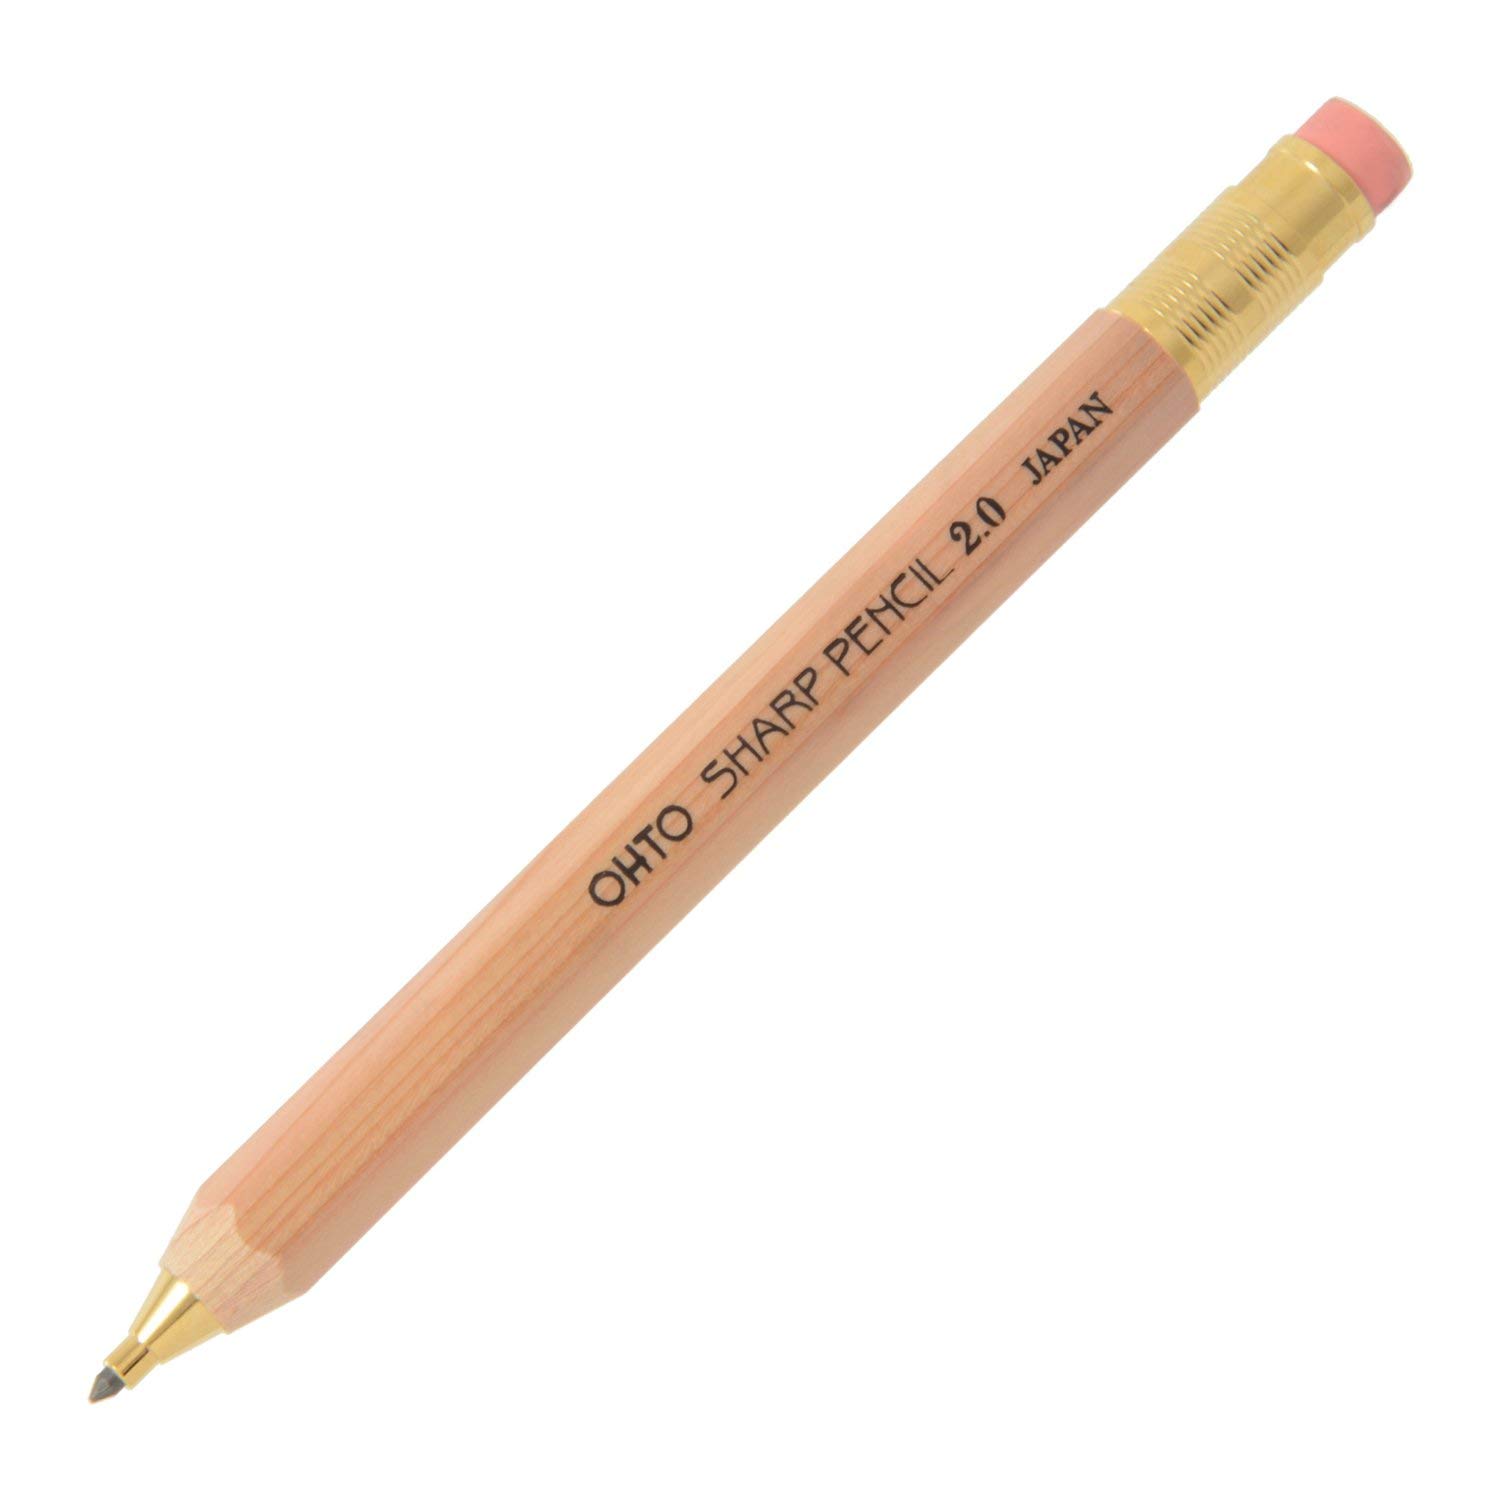 Ohto Natural 2.0 Mechanical Pencil